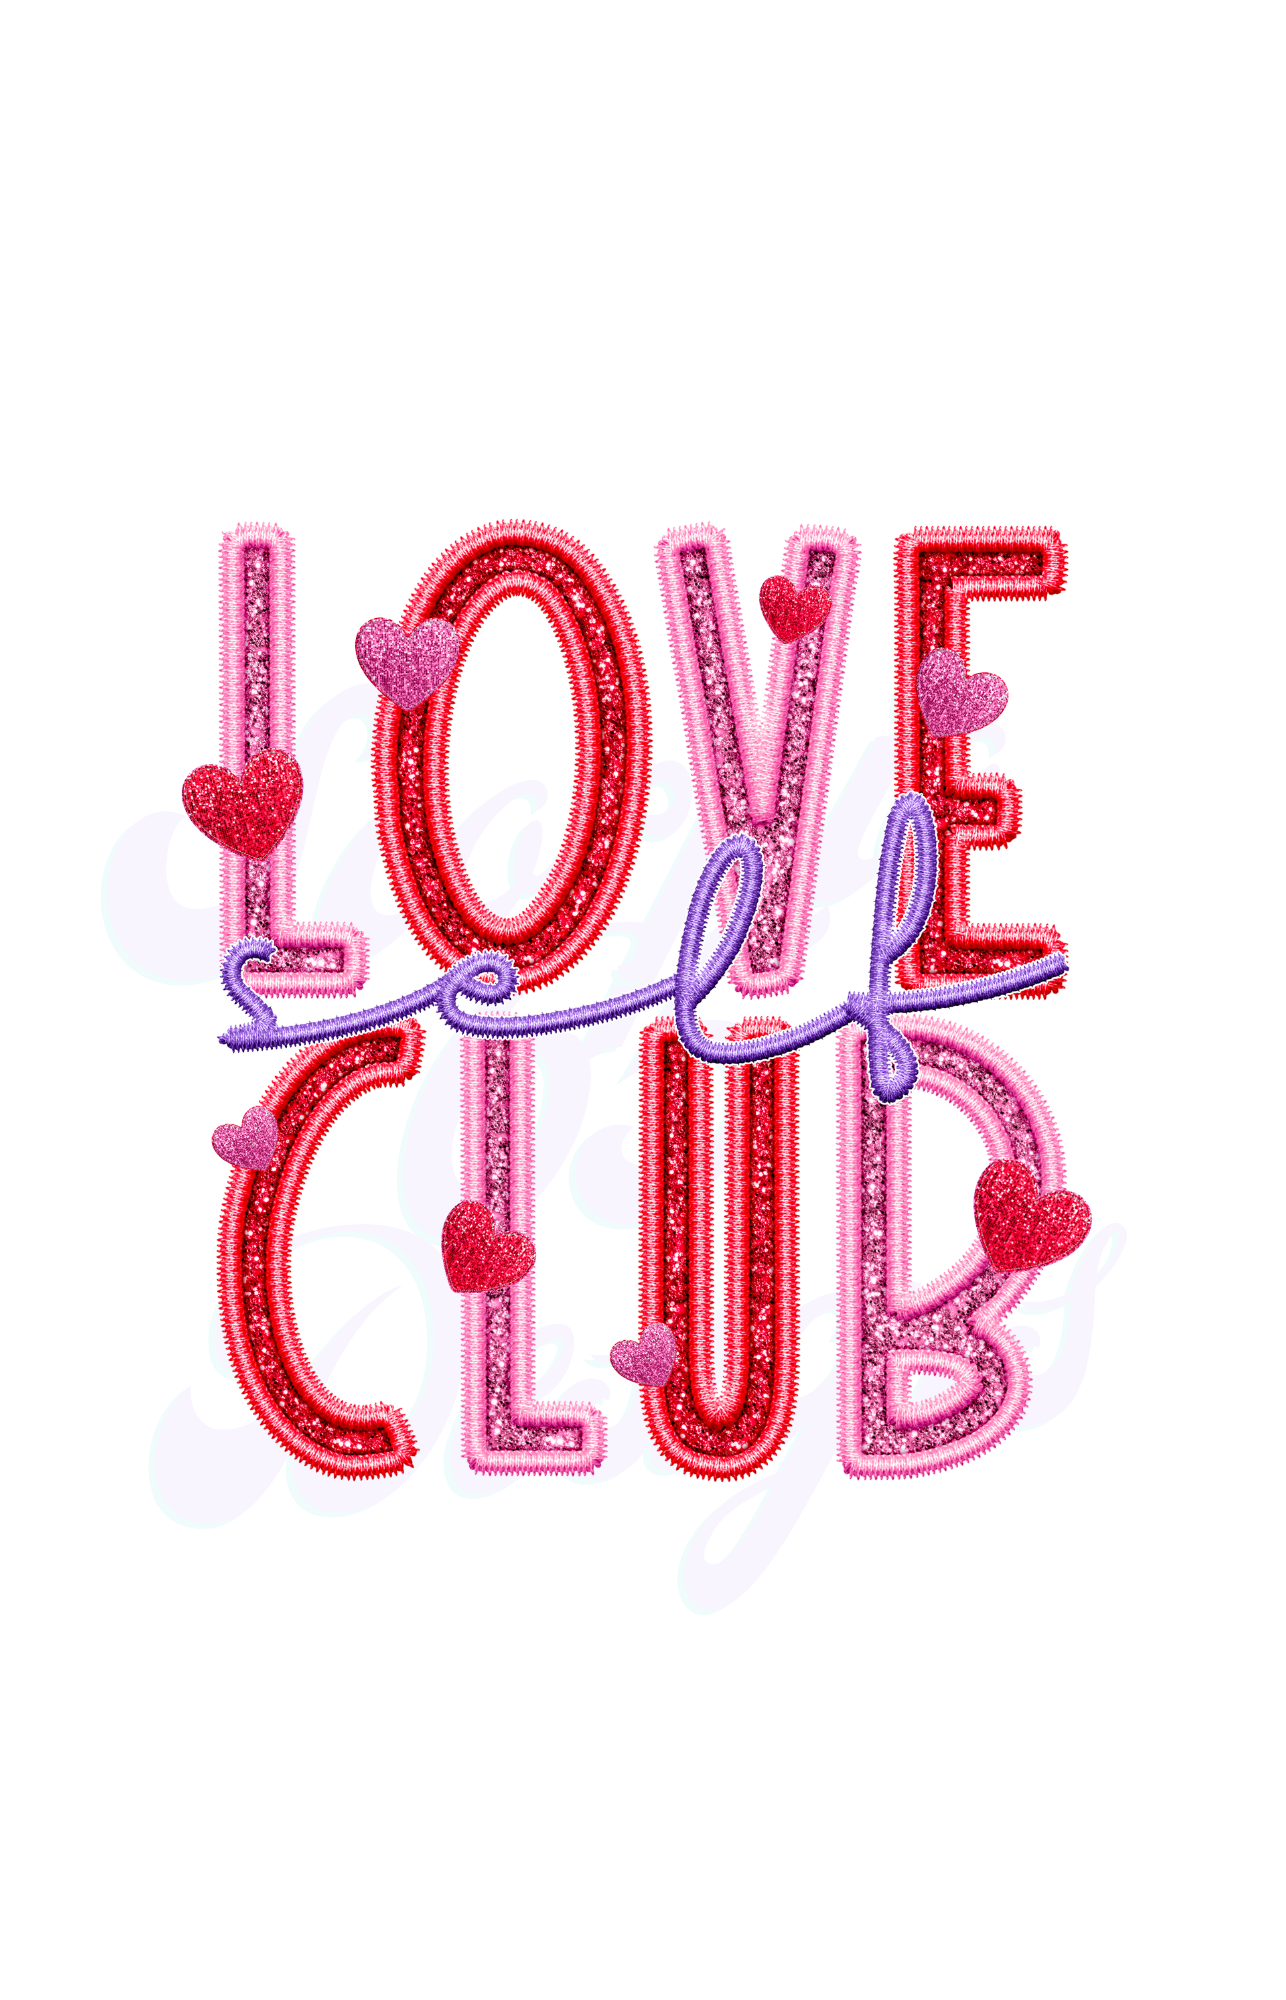 Copy of Anti Love Club Scorpio 65 Designs